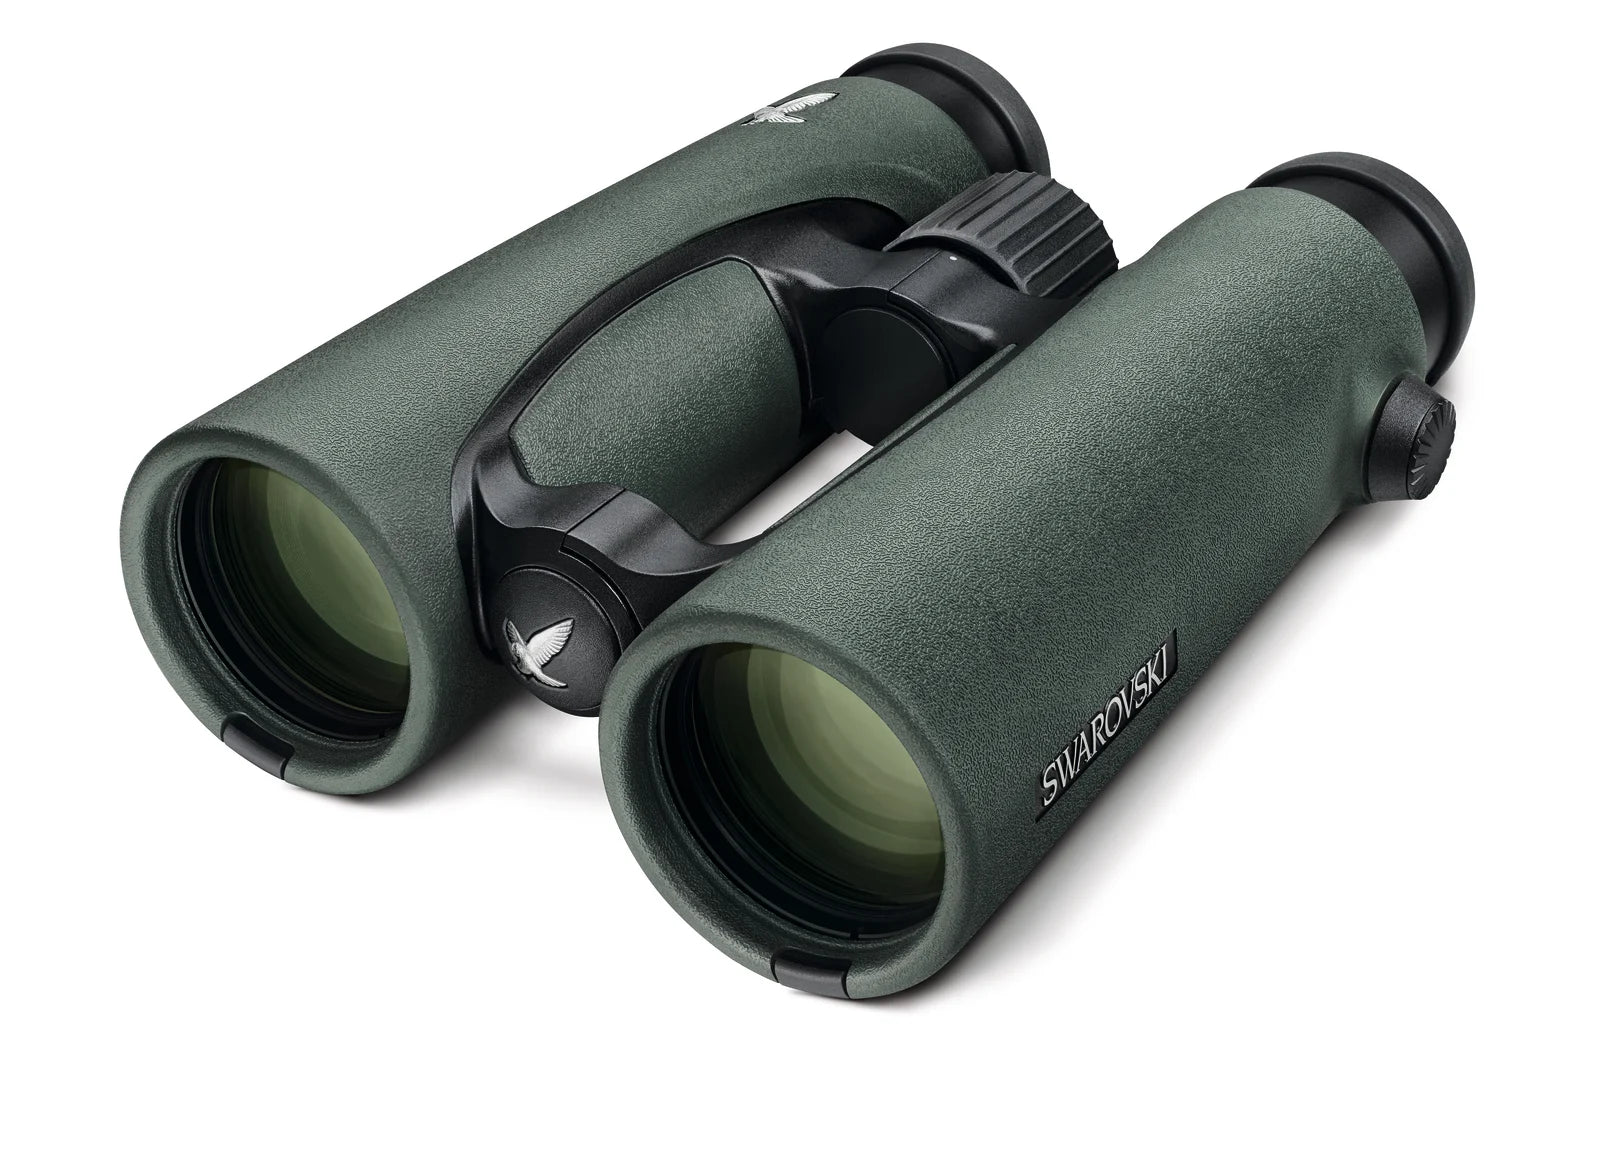 Swarovski 10x42 Field Pro EL Swarovision binoculars - Product Photo 9 - Close up view of the binoculars